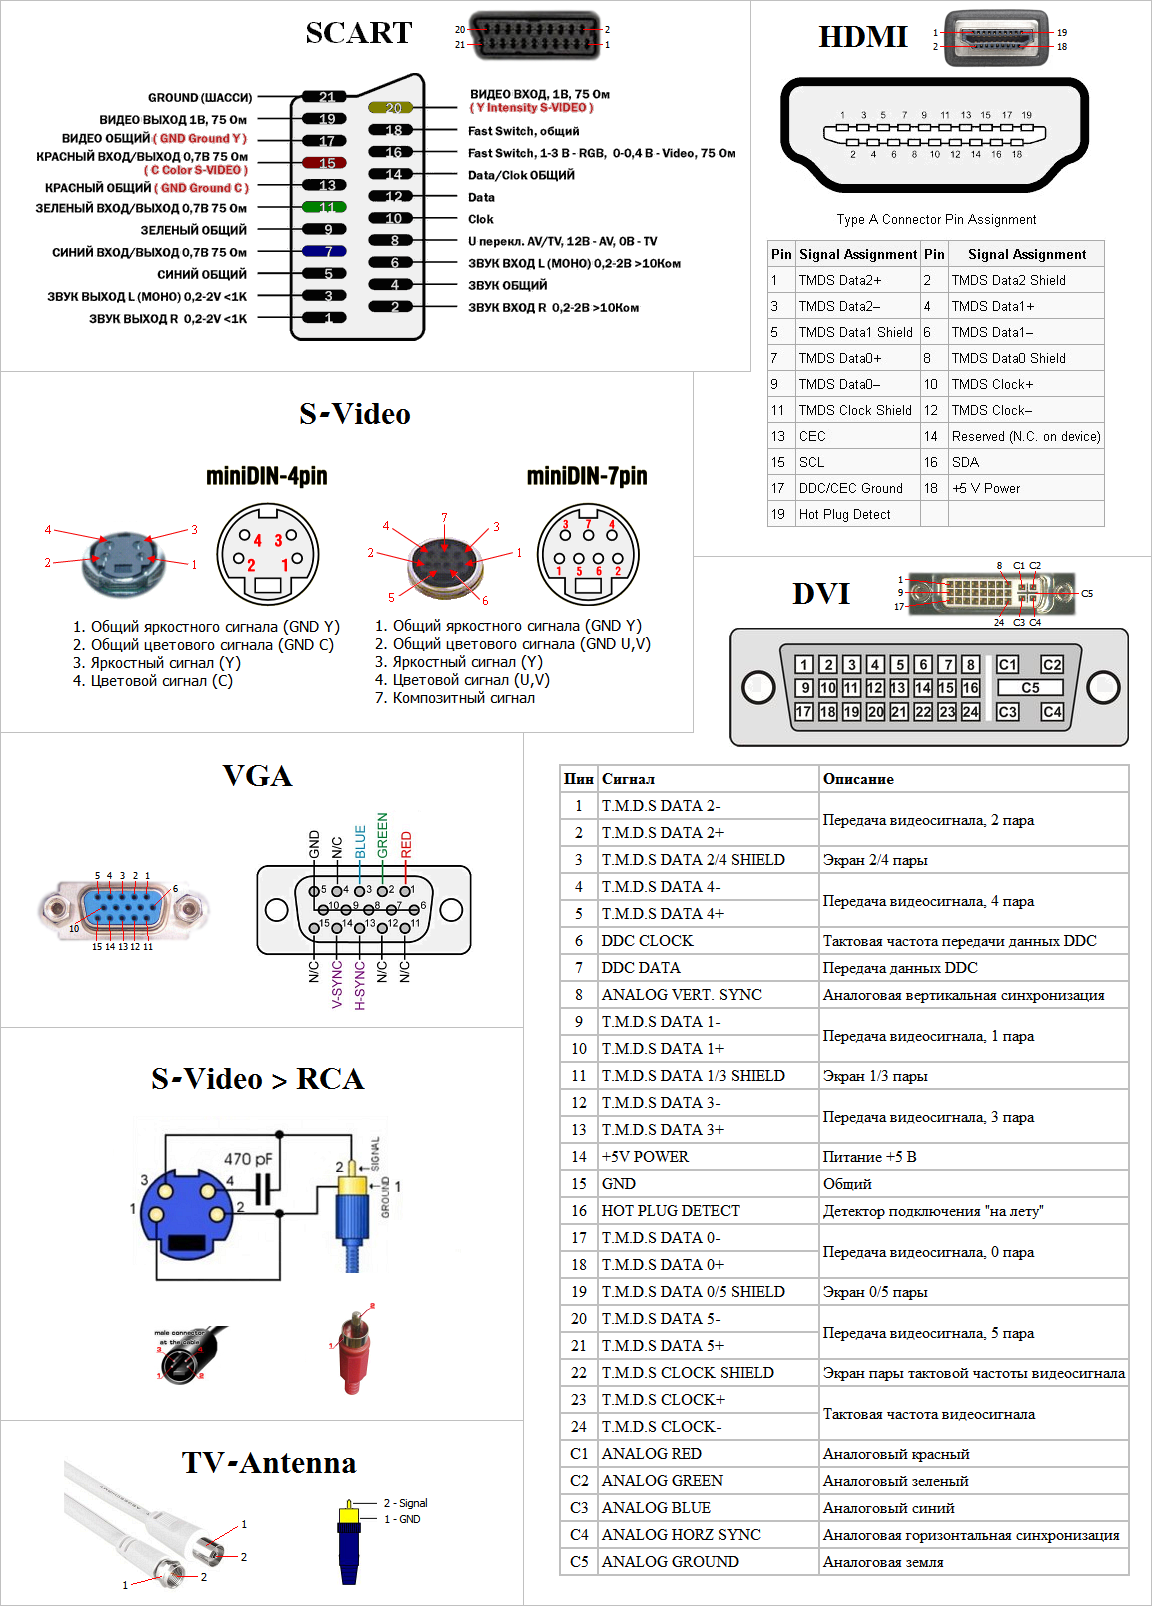 Особенности разъёмов DVI-D и VGA